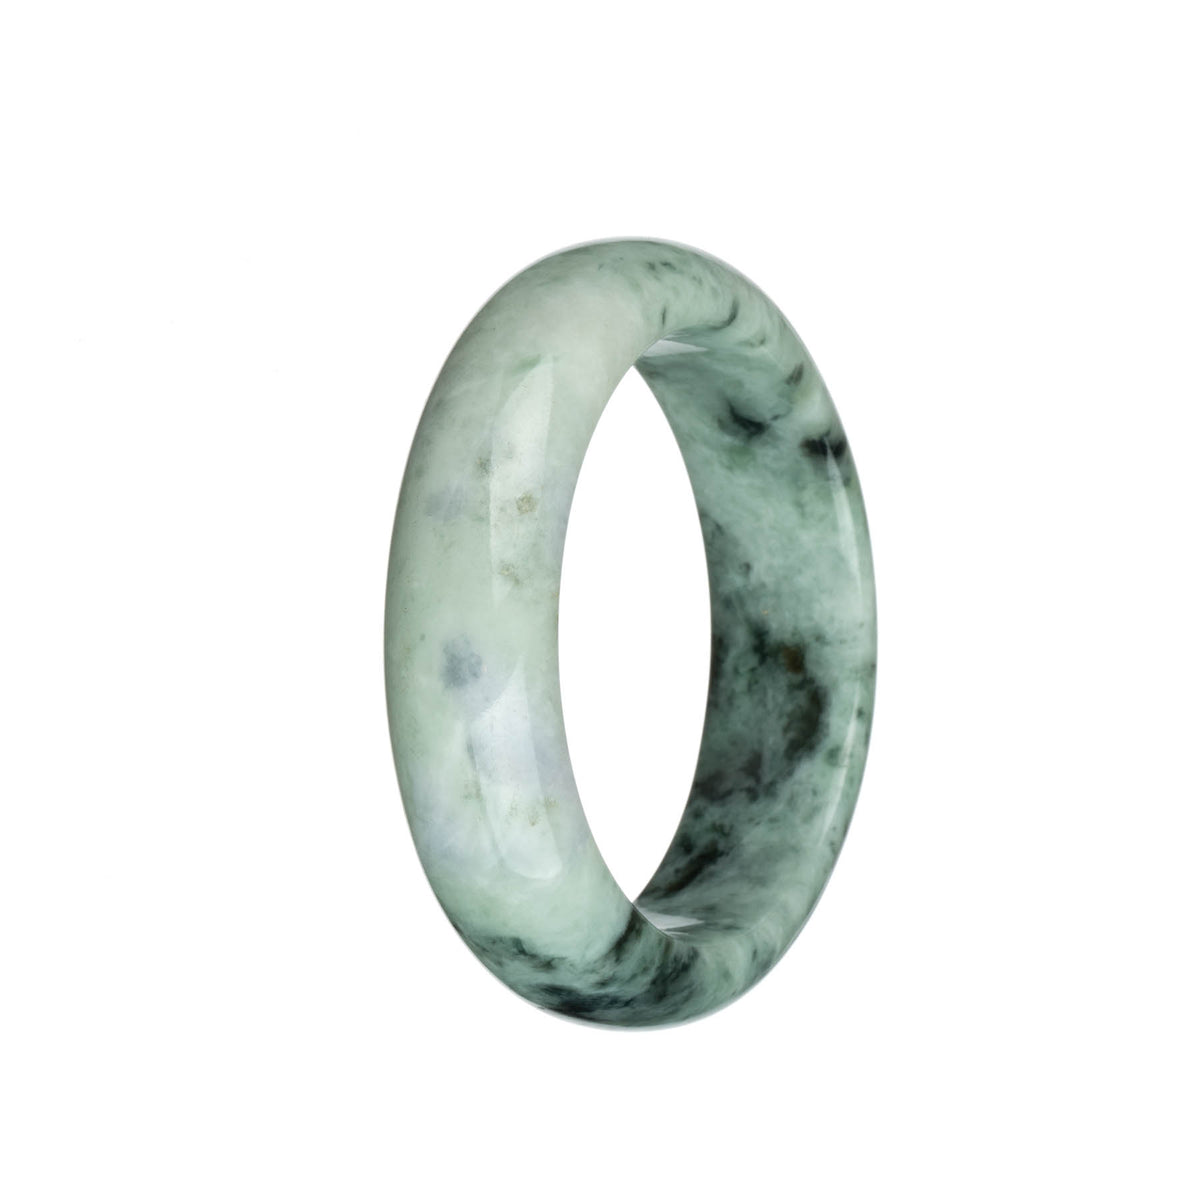 Genuine Grade A Pale Green with Dark Green Patterns Burma Jade Bangle Bracelet - 57mm Half Moon